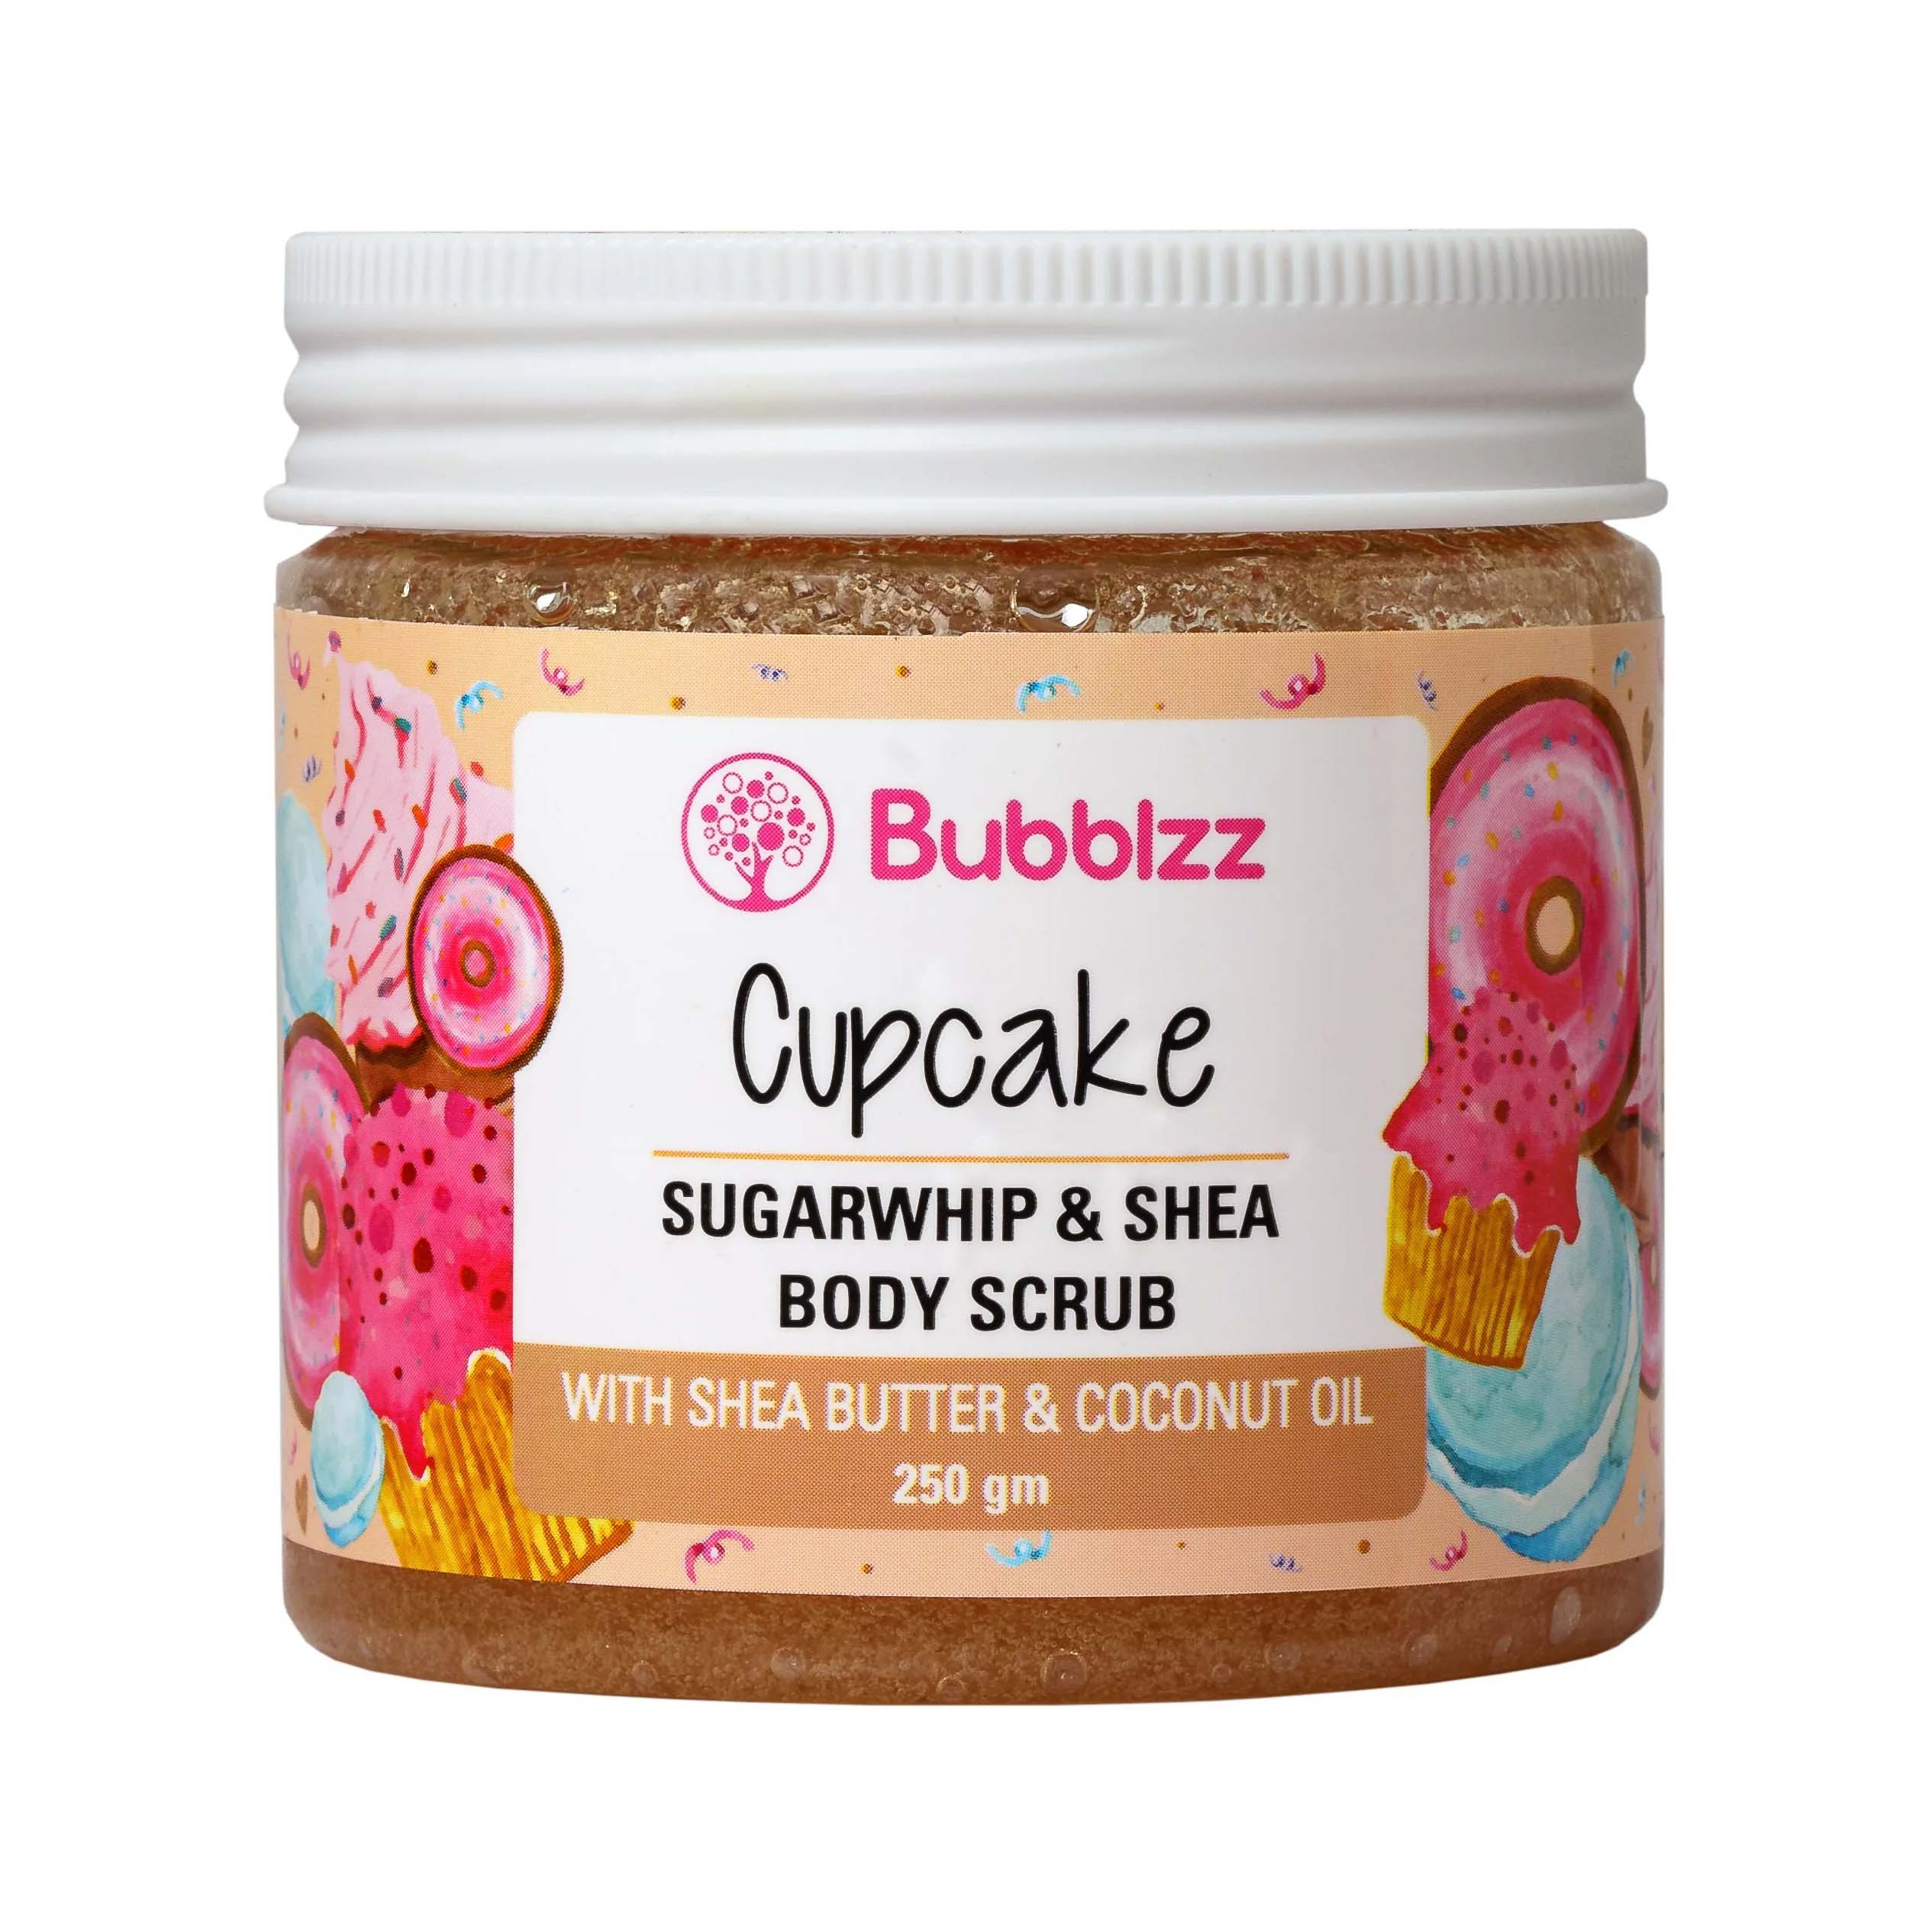 Bubblzz Cupcake Sugar Whip & Shea Body Scrub – 250gm